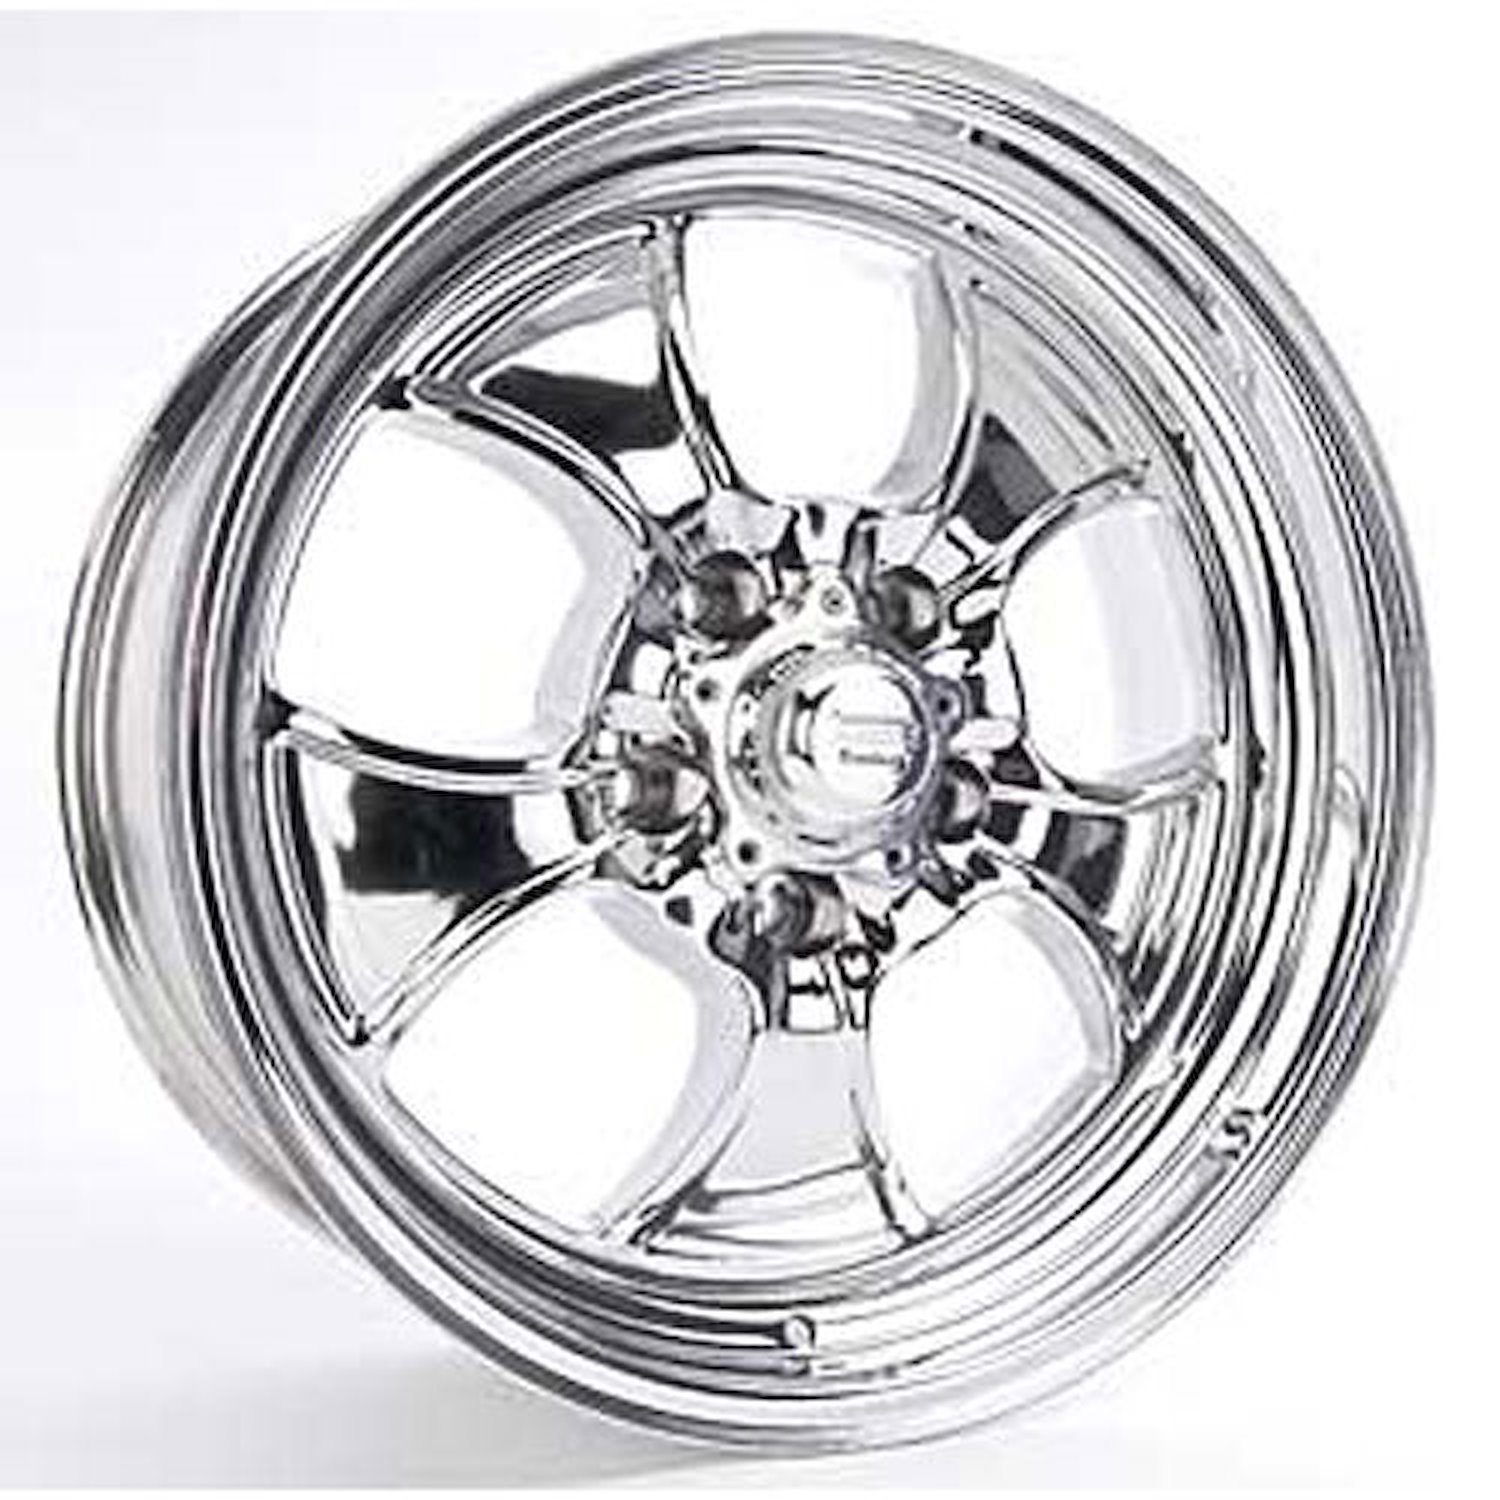 Polished Hopster Wheel Size: 17 x 9.5" Bolt Circle: 5 x 4-3/4" Rear Spacing: 5-1/2"